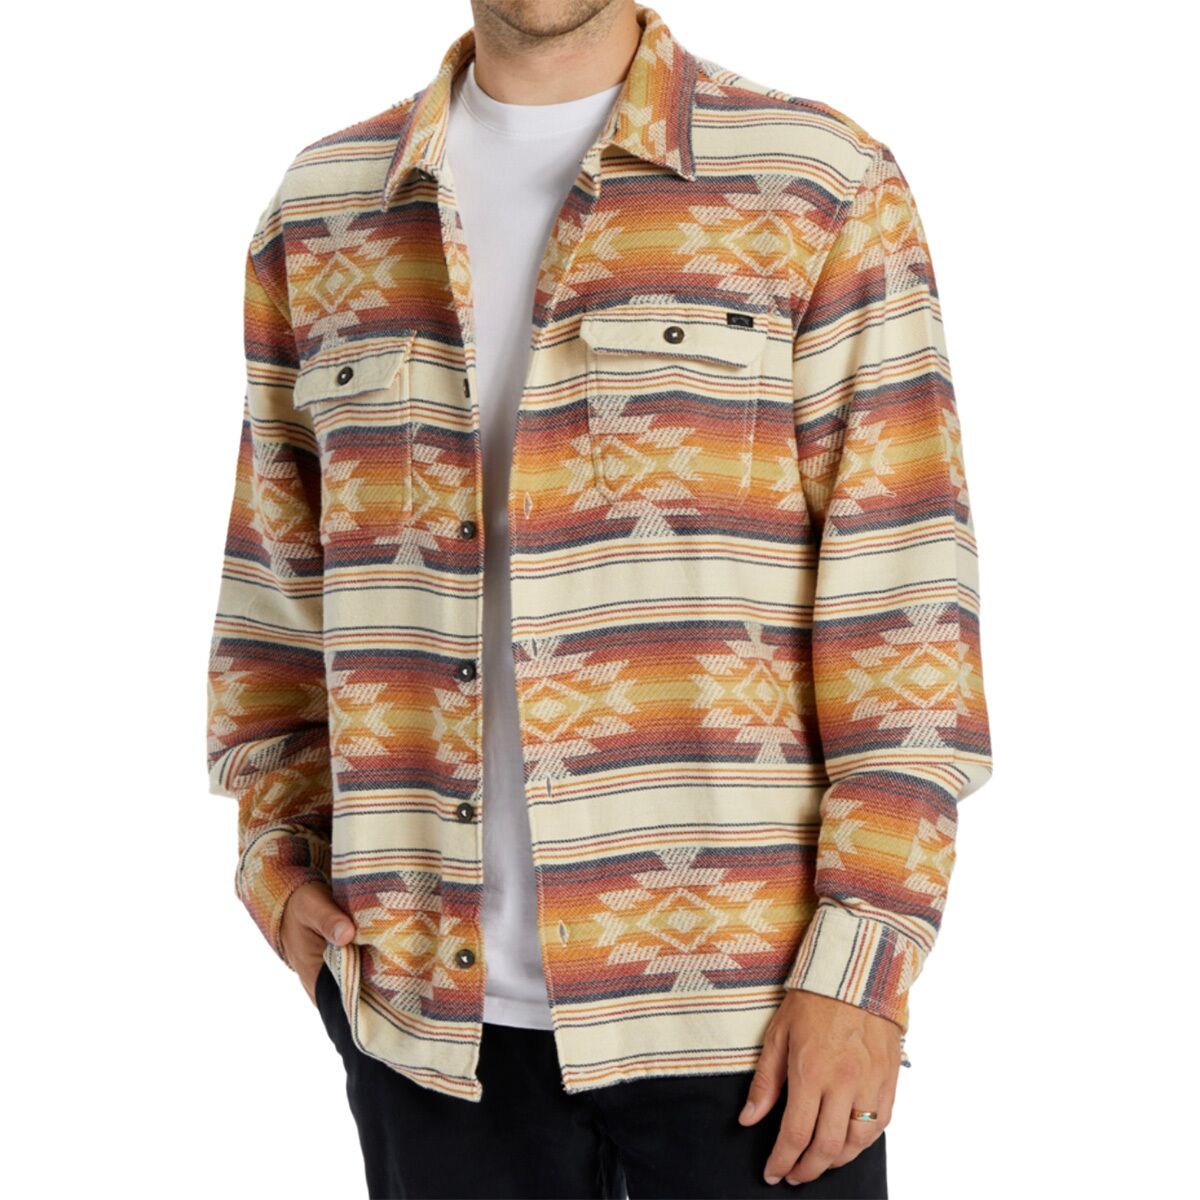 Billabong Offshore Jacquard Flannel Shirt - Men's